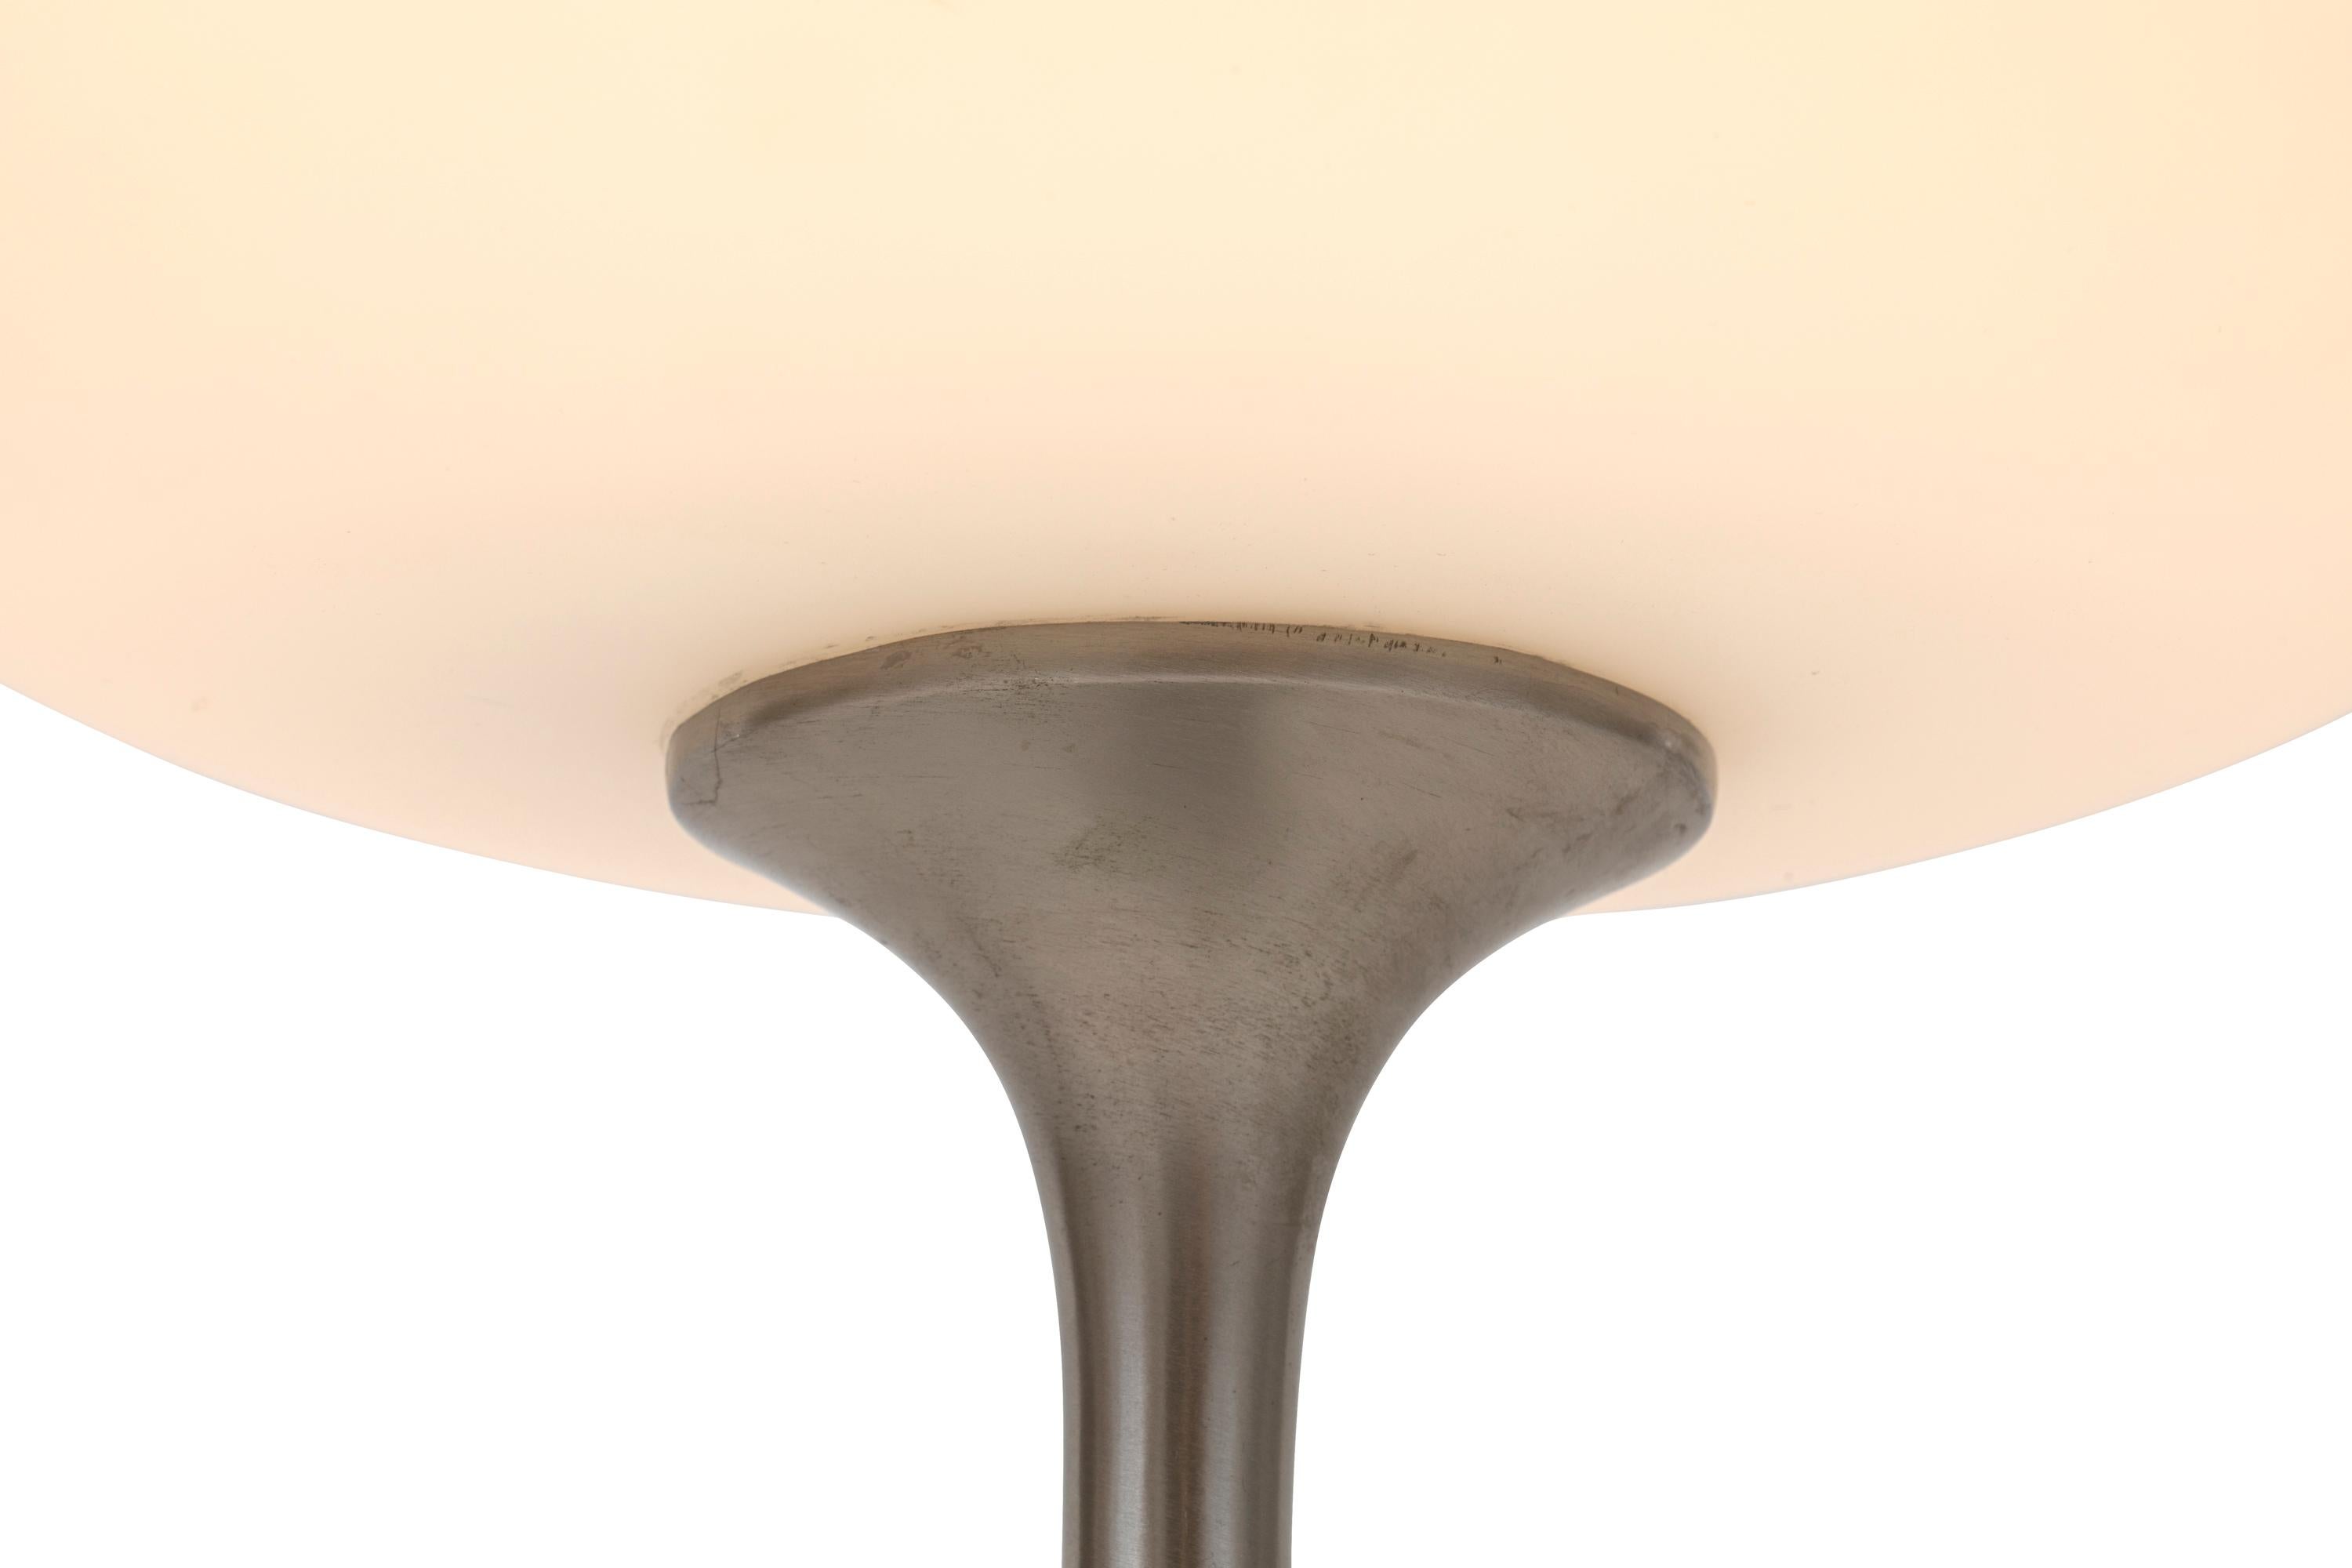 American Mid-Century Modern Laurel Mushroom Shade Table Lamp by Bill Curry, 1960s